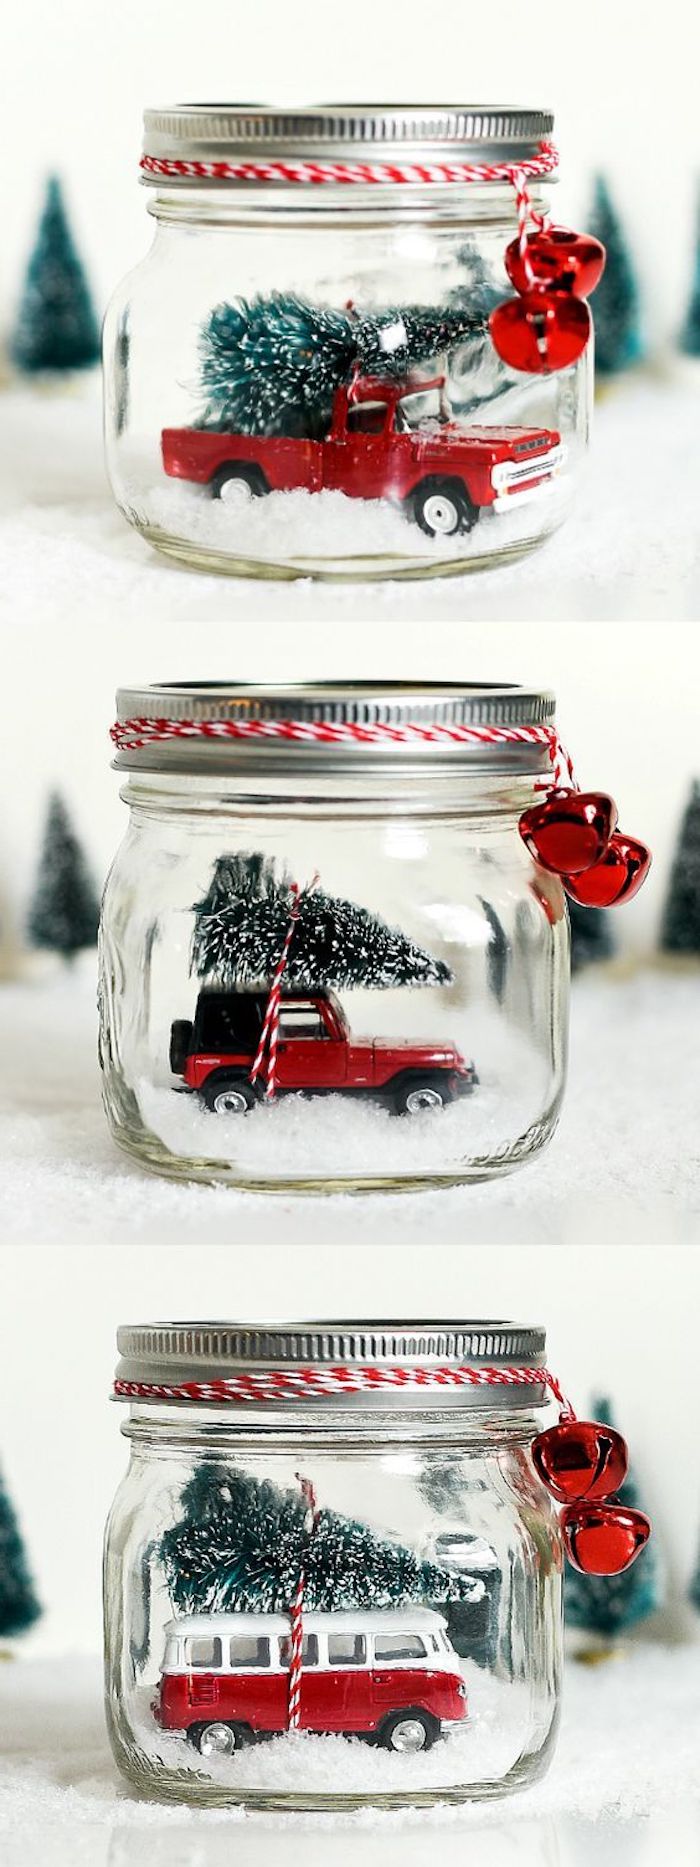 modele de cadeau de noel ado garcon, pot en verre transformé en boule de noel, neige artificilelle, voiture avec figurine sapin de noel